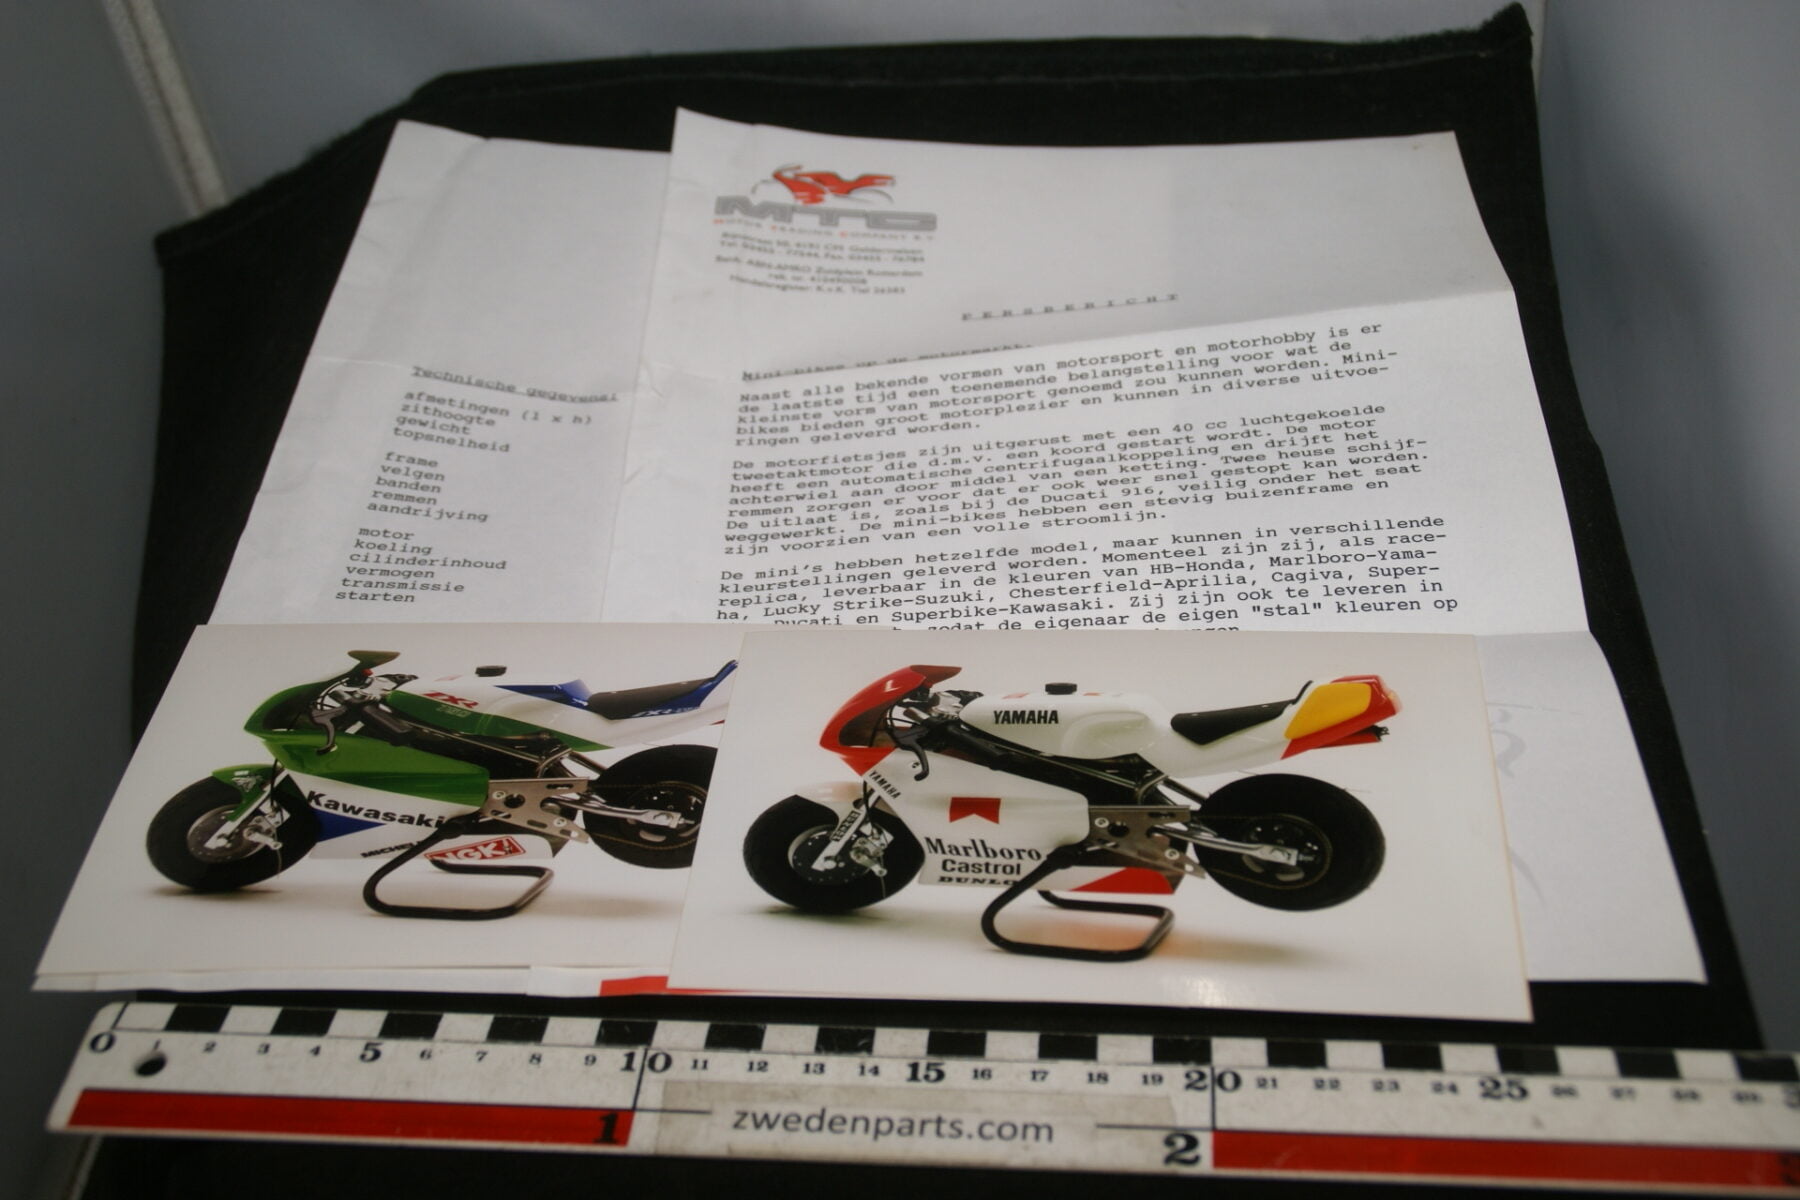 DSC02183 1991 originele persbericht mini motorfiets-144e63d7